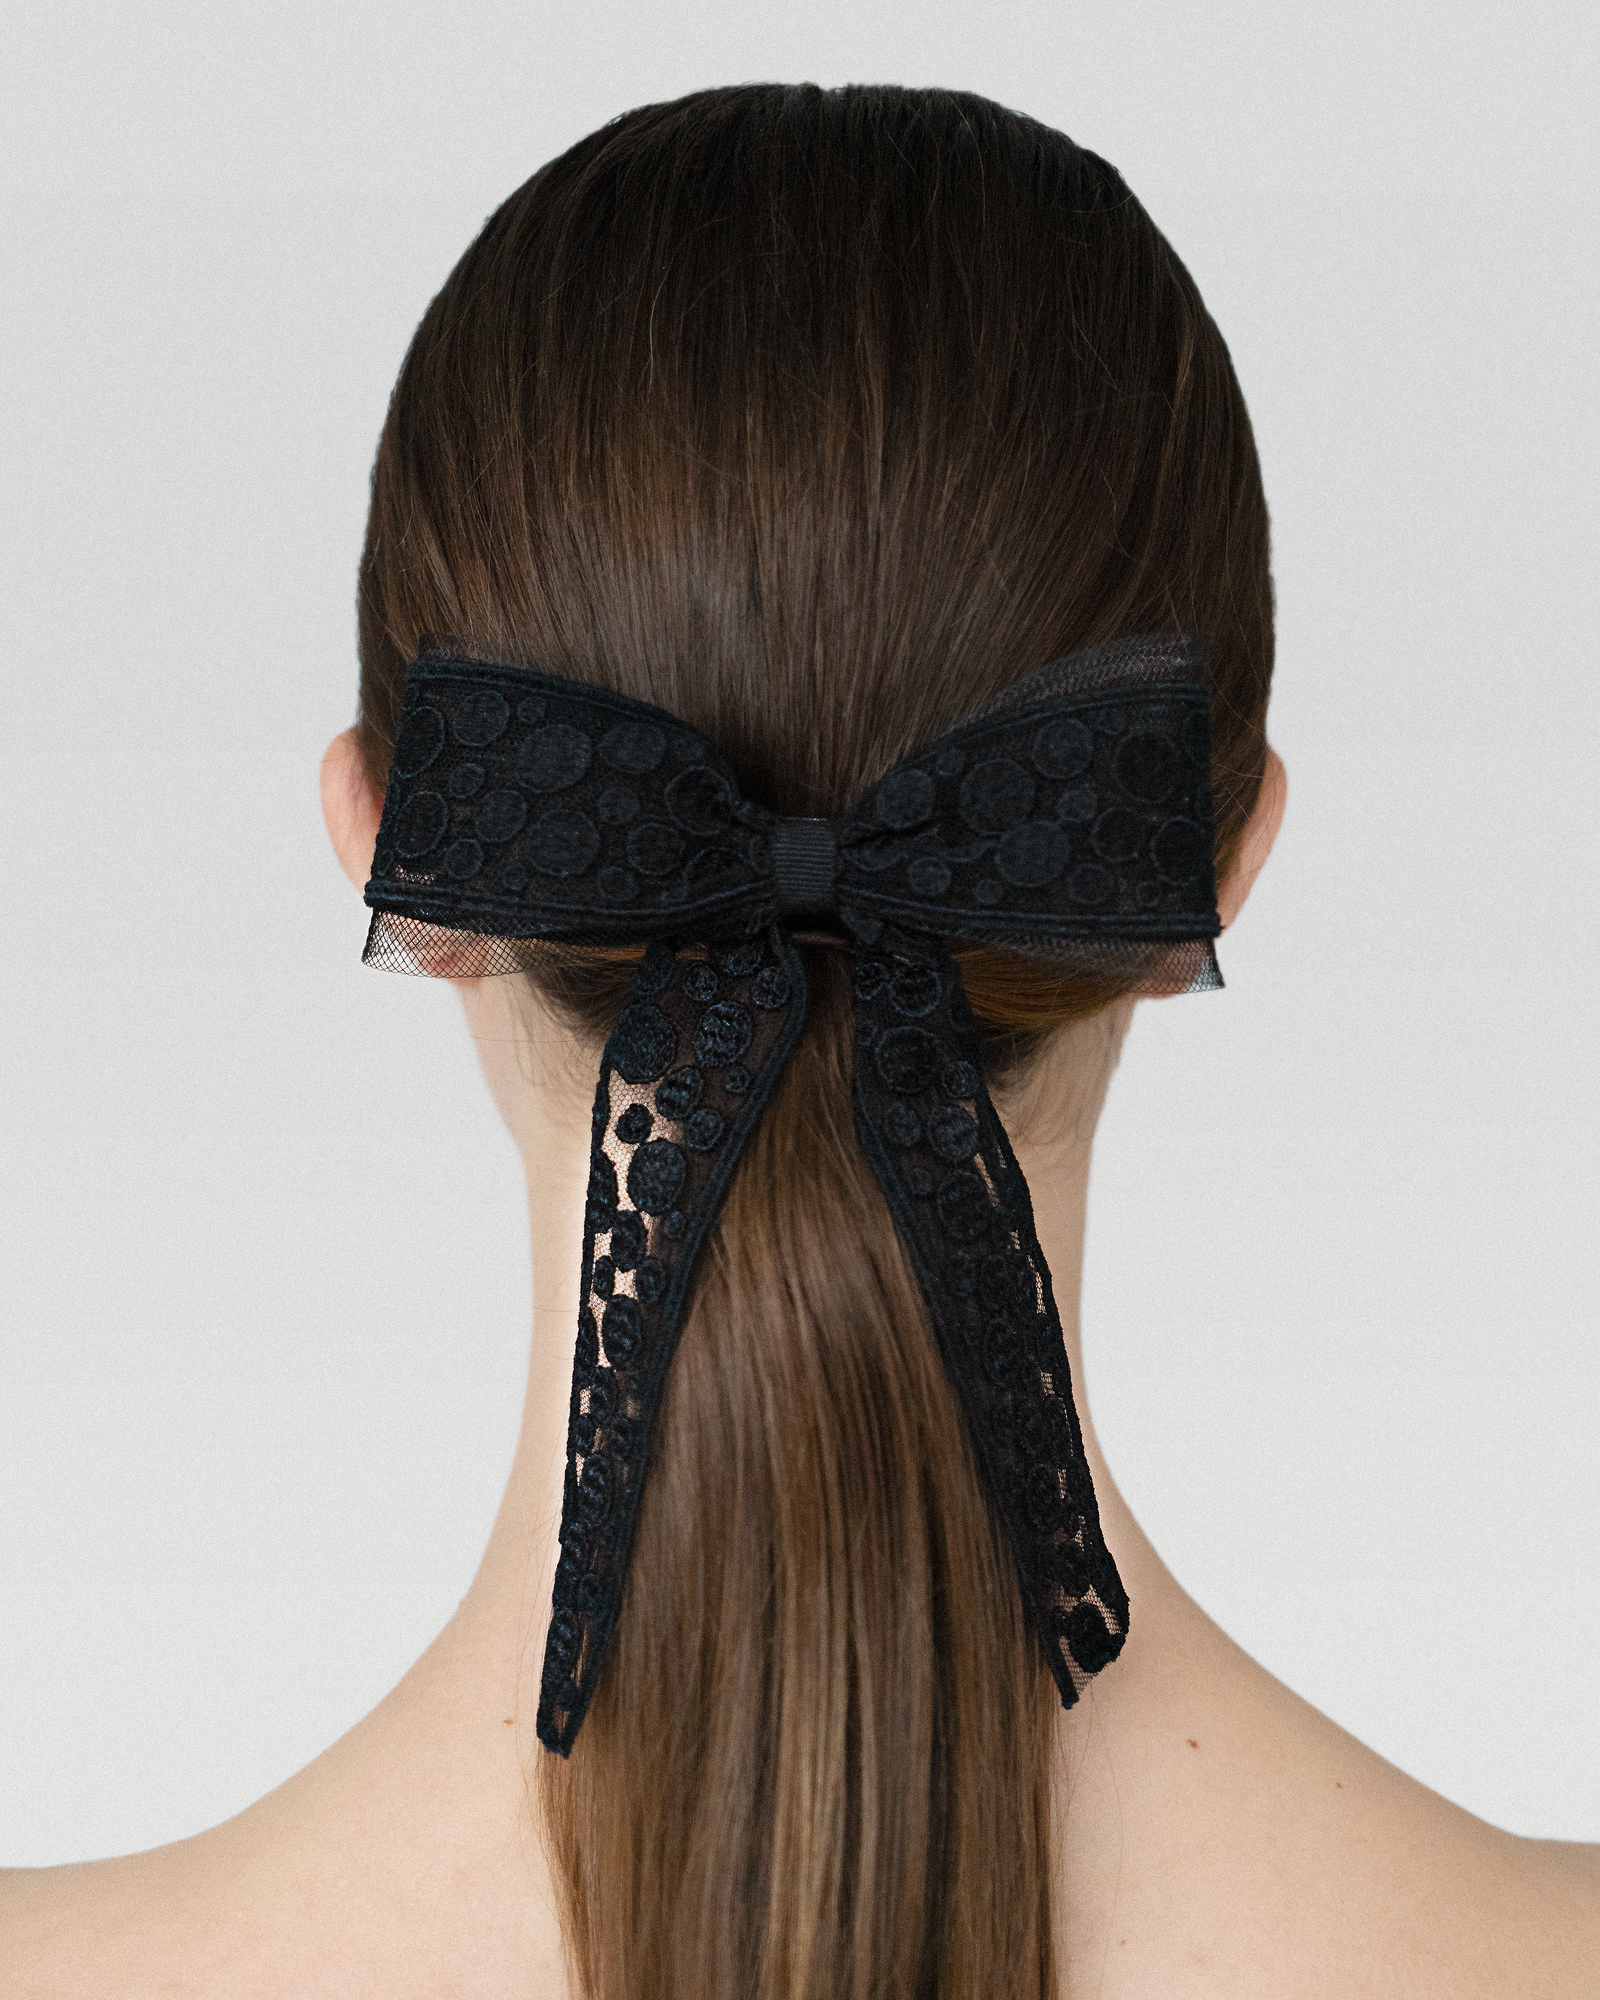 Velvet and pearl hair bow